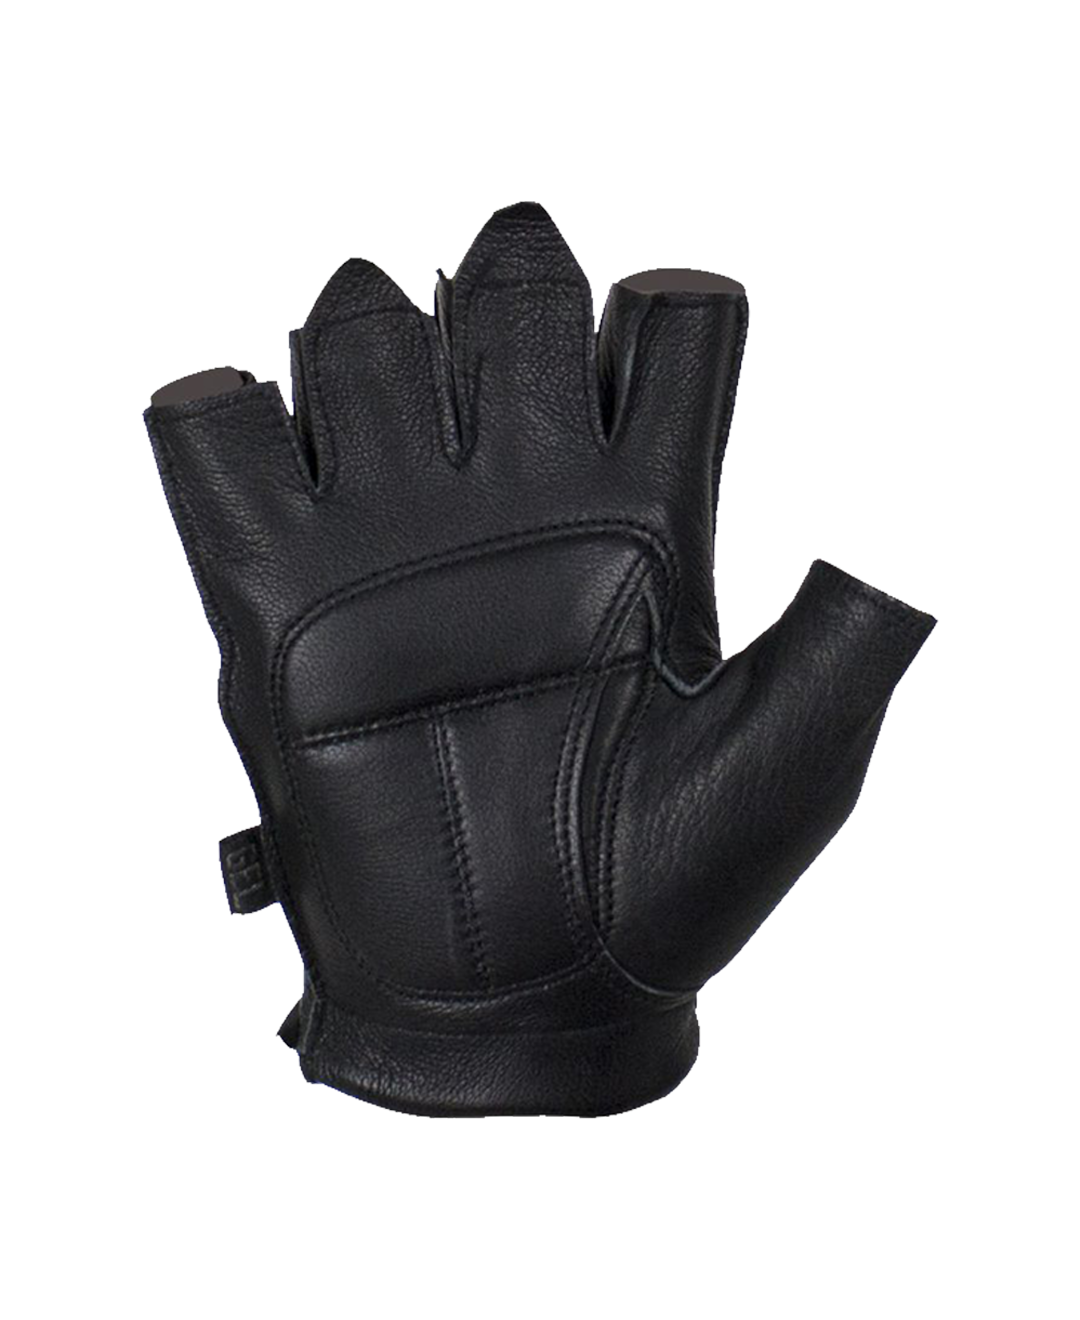 Fingerless Gel Palm Deerskin Gloves